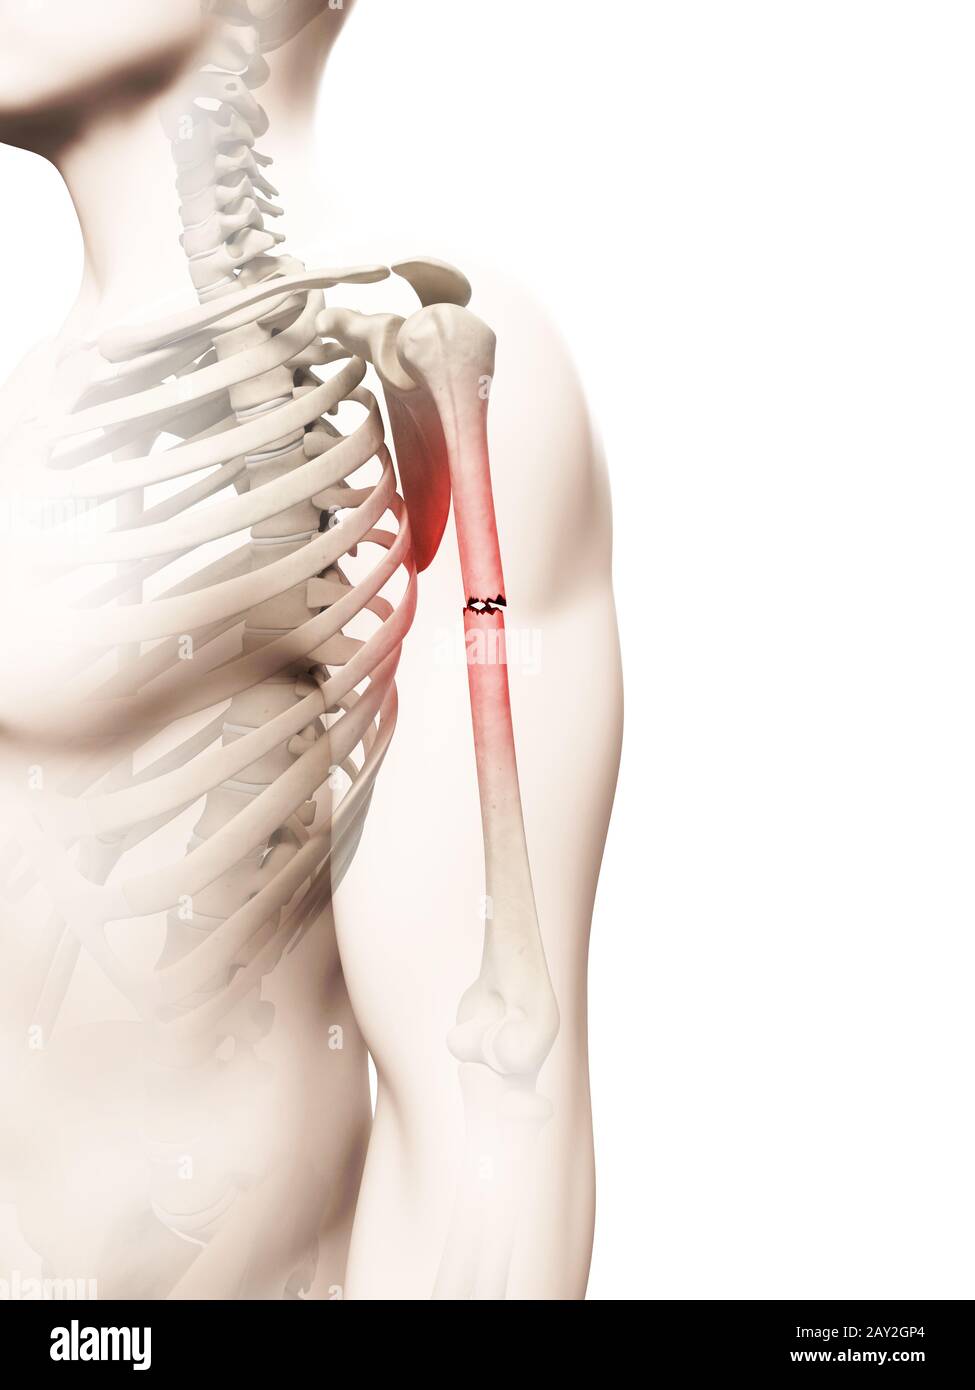 medical illustration of a borken arm bone Stock Photo